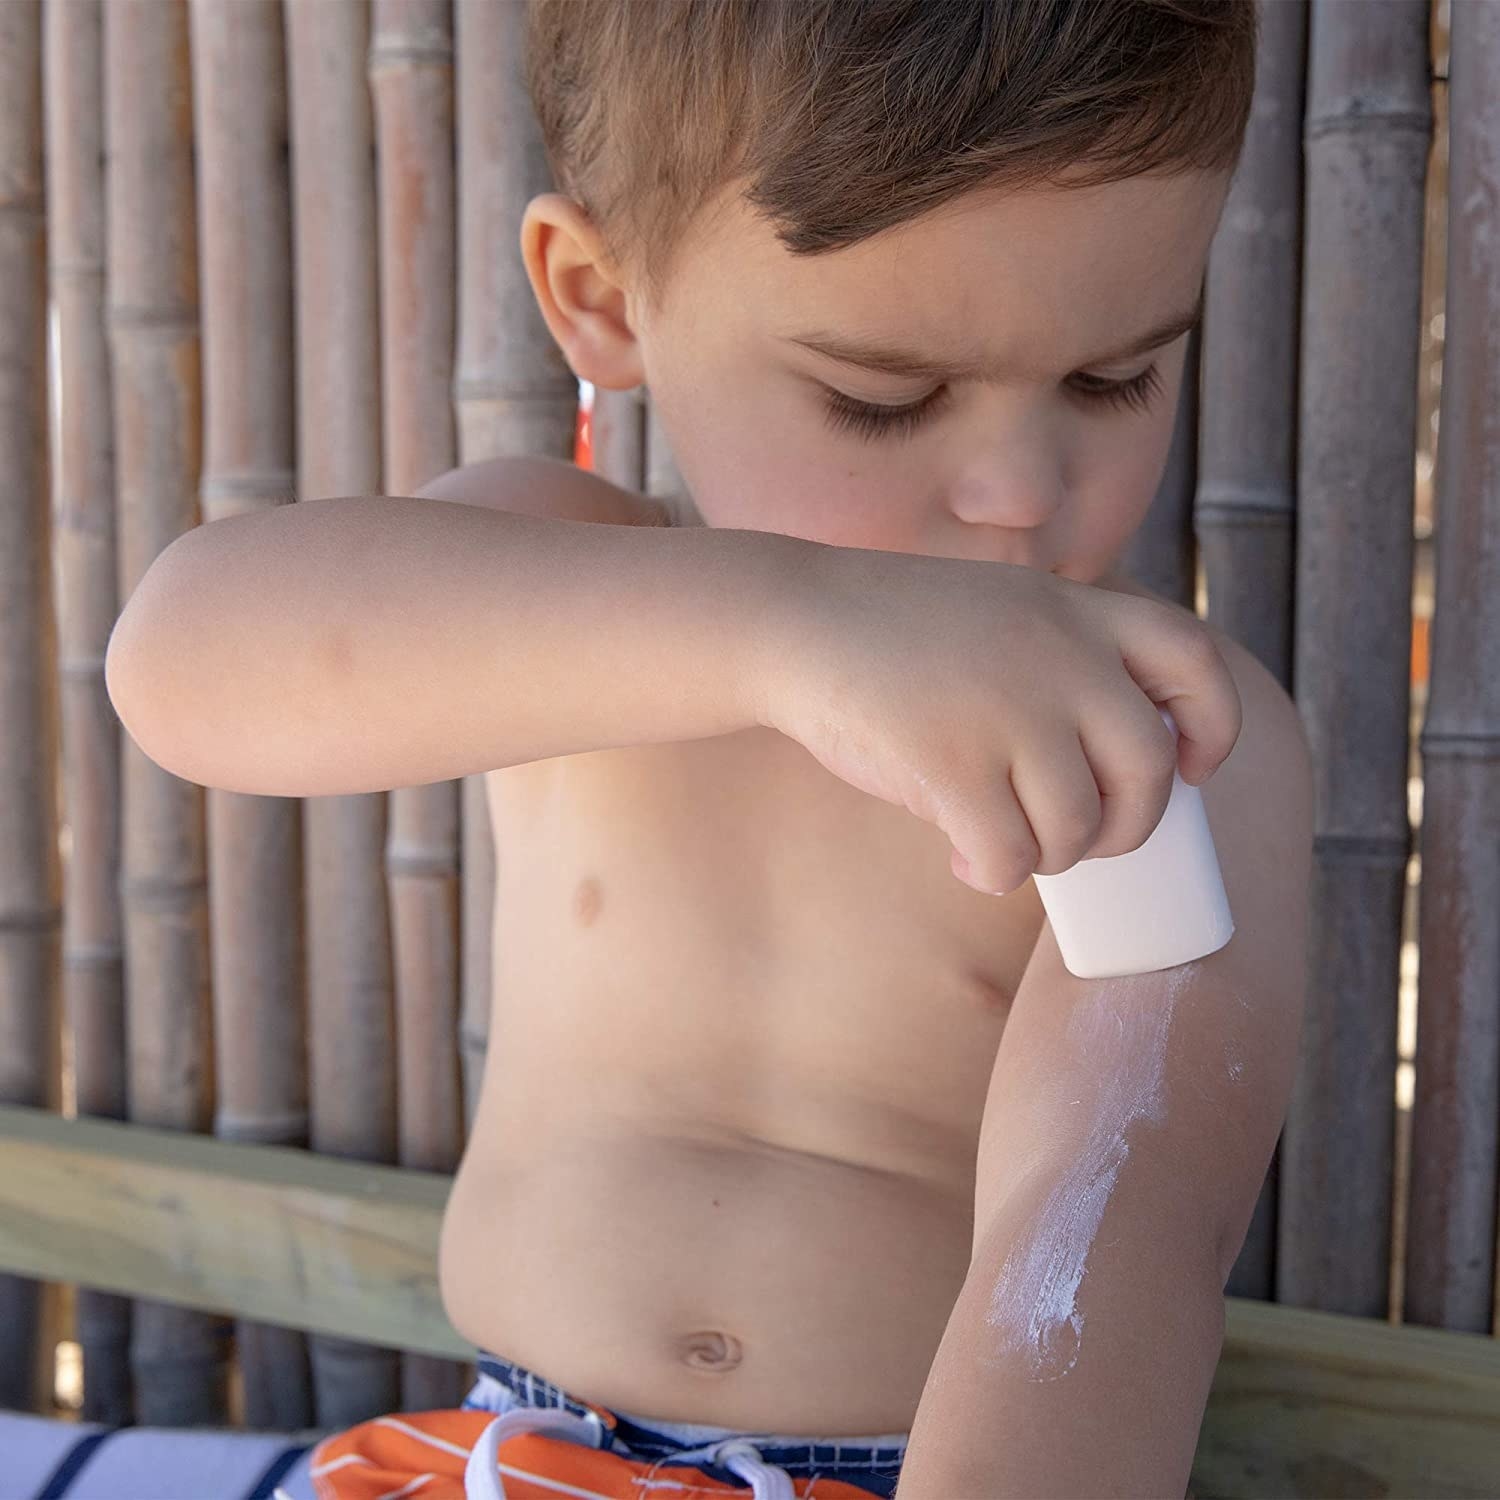 Kid applying sunscreen